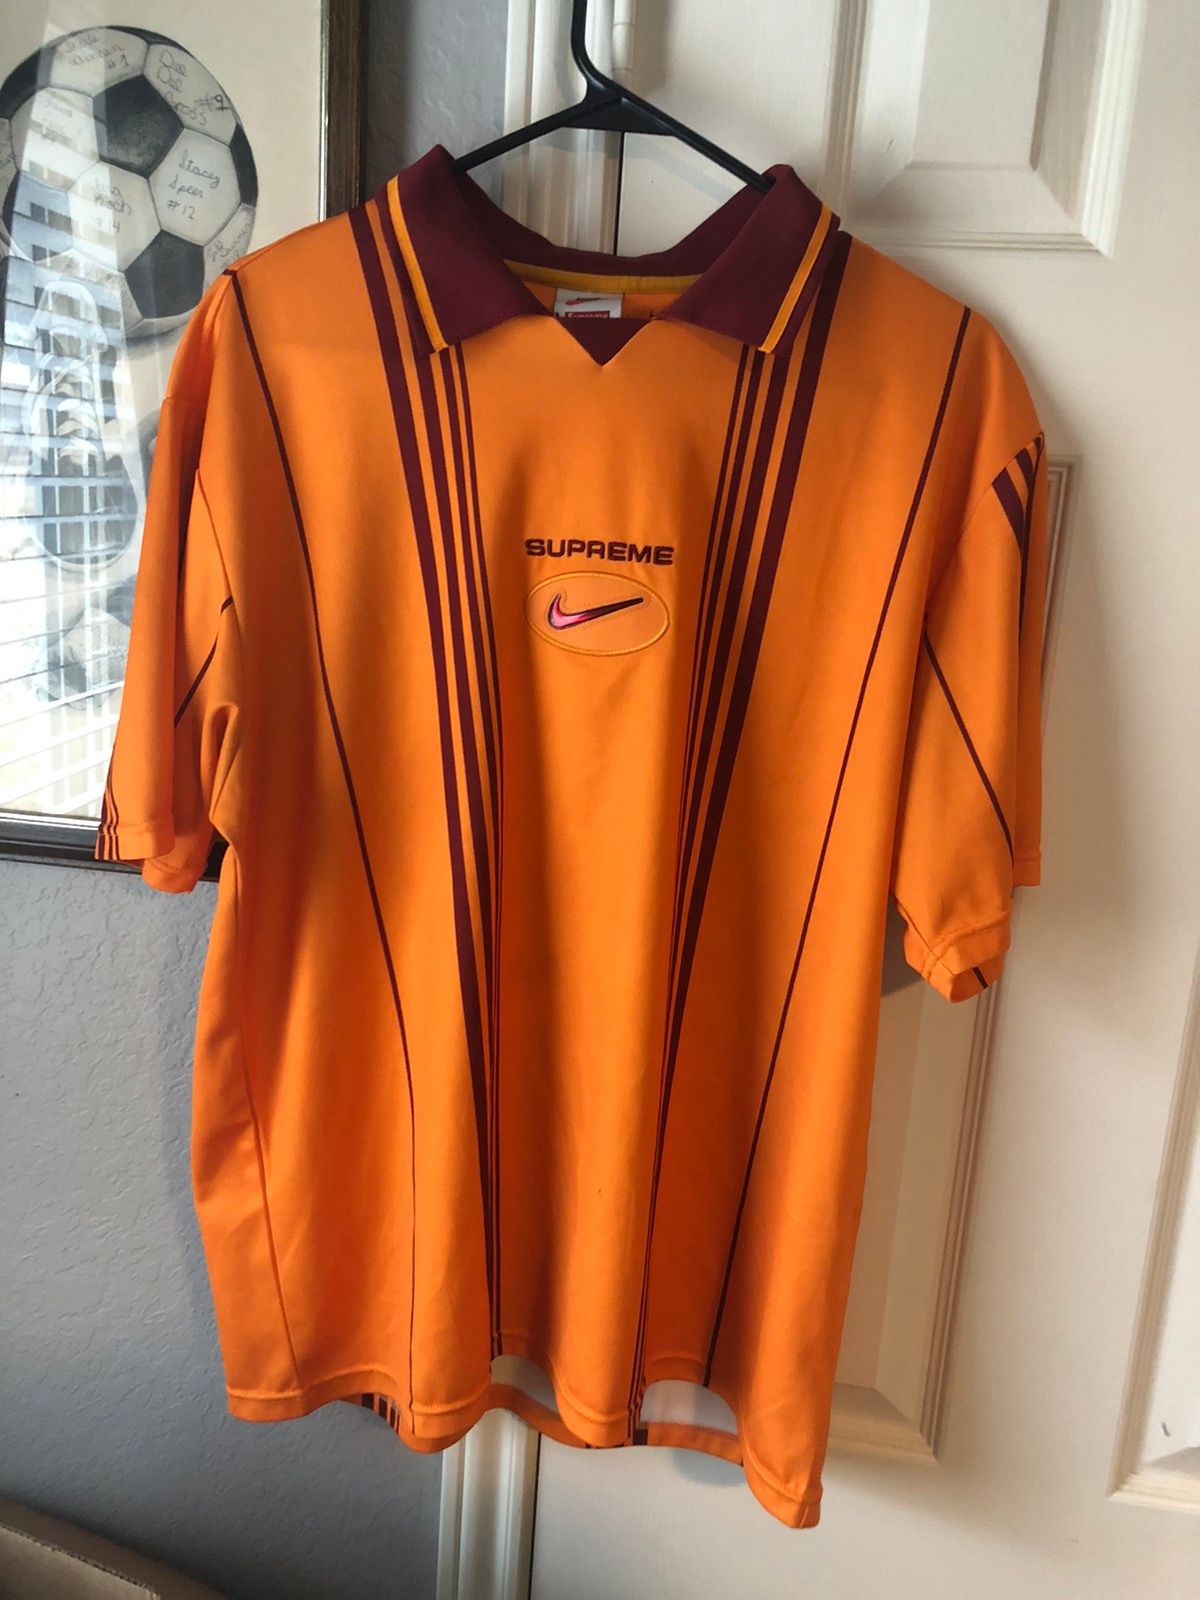 Supreme Supreme x Nike Jewel Stripe Soccer Jersey 'Orange'   Grailed